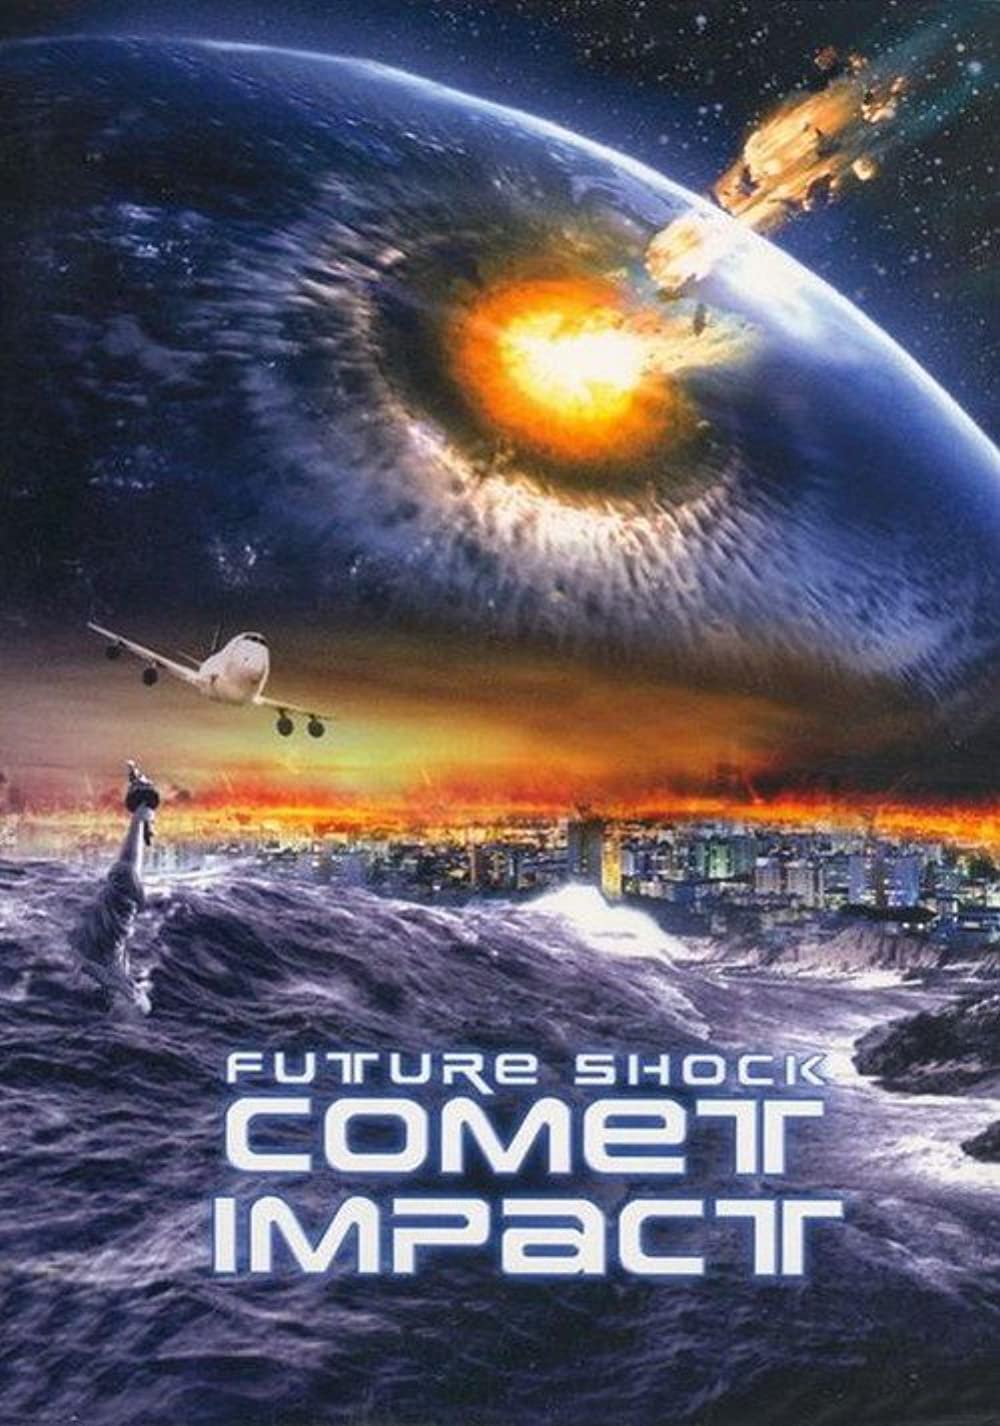 Download Comet Impact Movie | Comet Impact